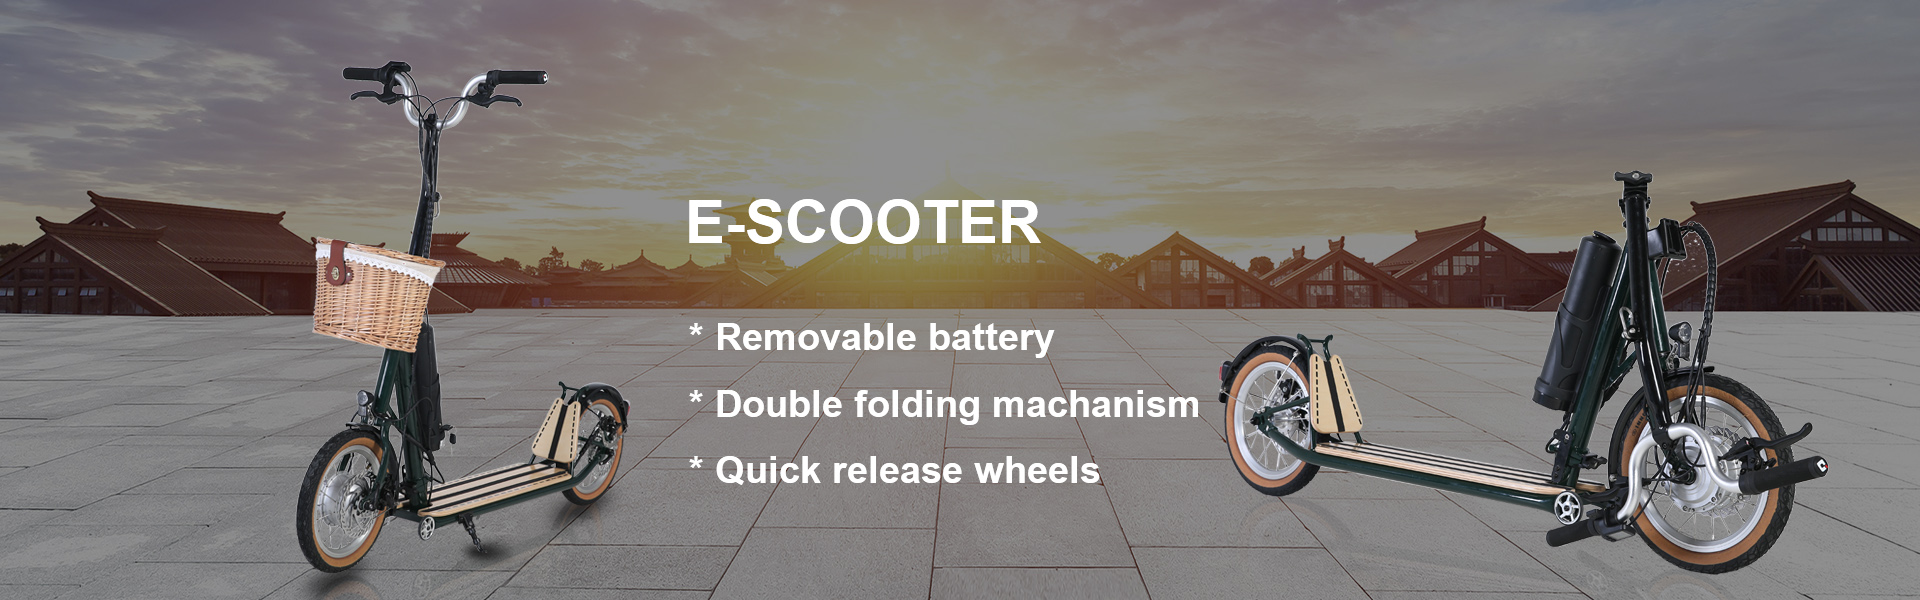 Elektrikli Scooter, Trottinette Électrique, Electric Scooter,SHENZHEN HAPPY-GO INTELLIGENT TECHNOLOGY CO.,LTD